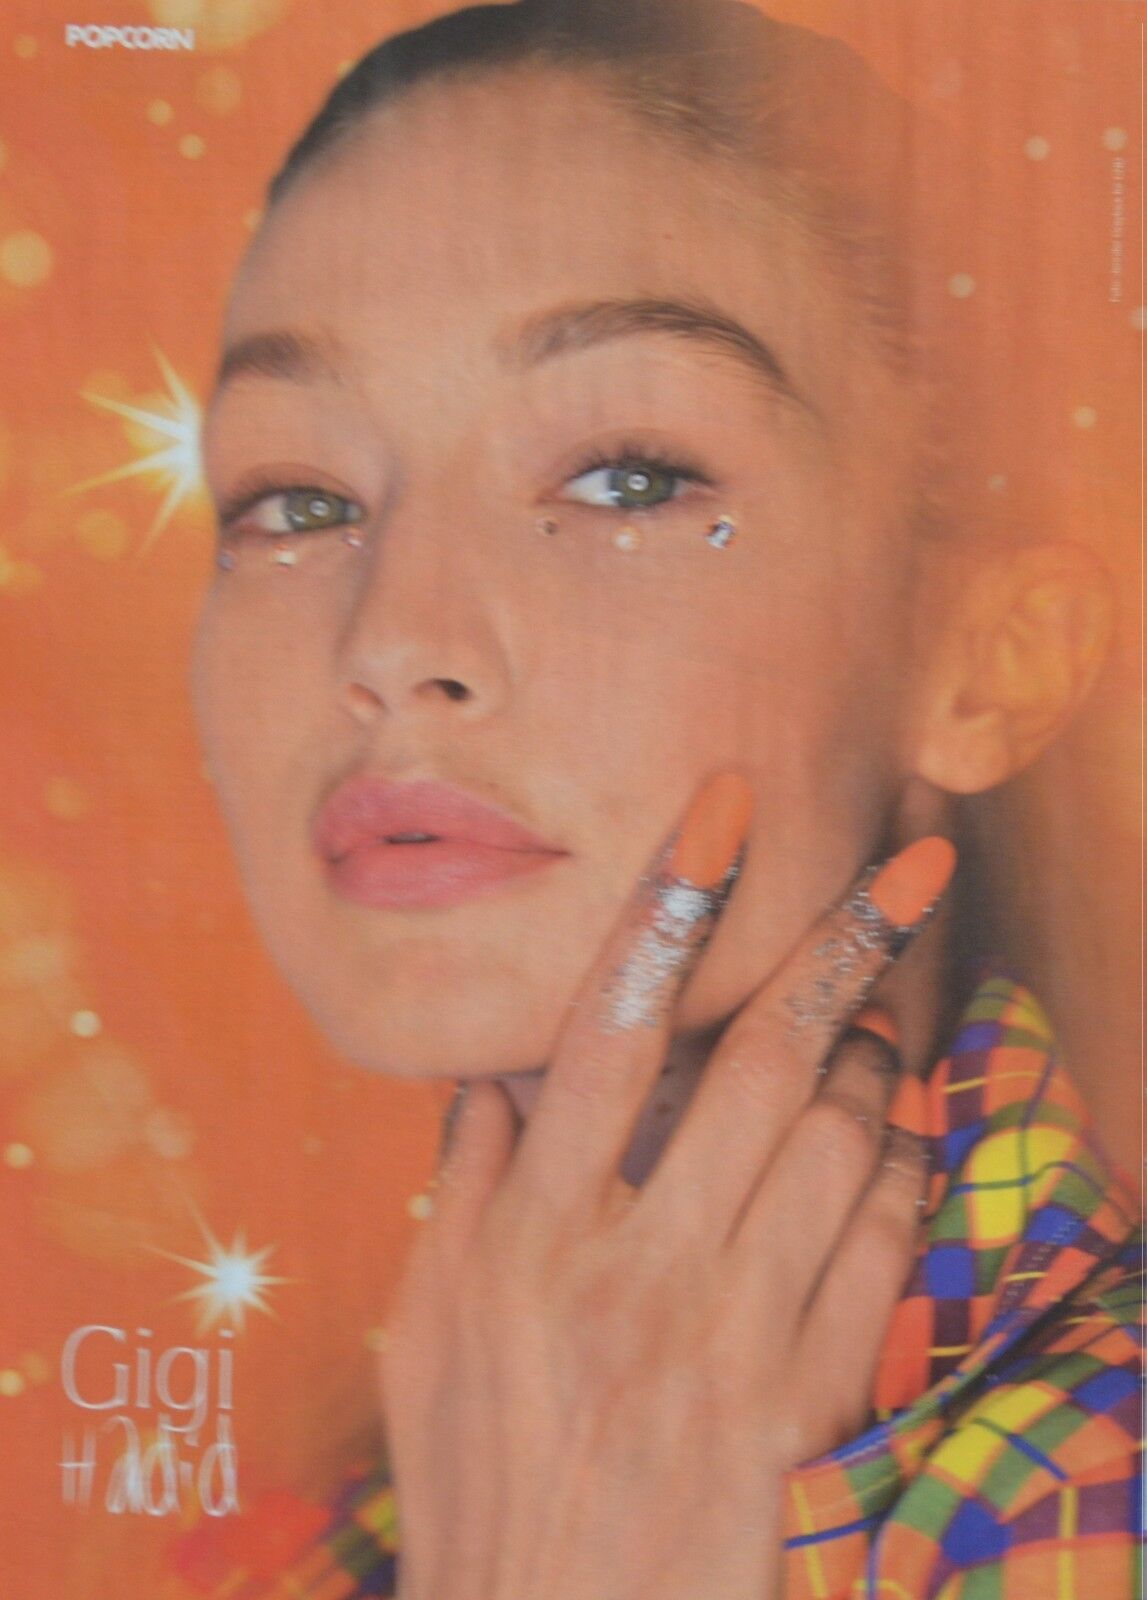 Gigi Hadid-A4 Poster (approx 21 x 28 cm) - TOPModel Clippings Fa